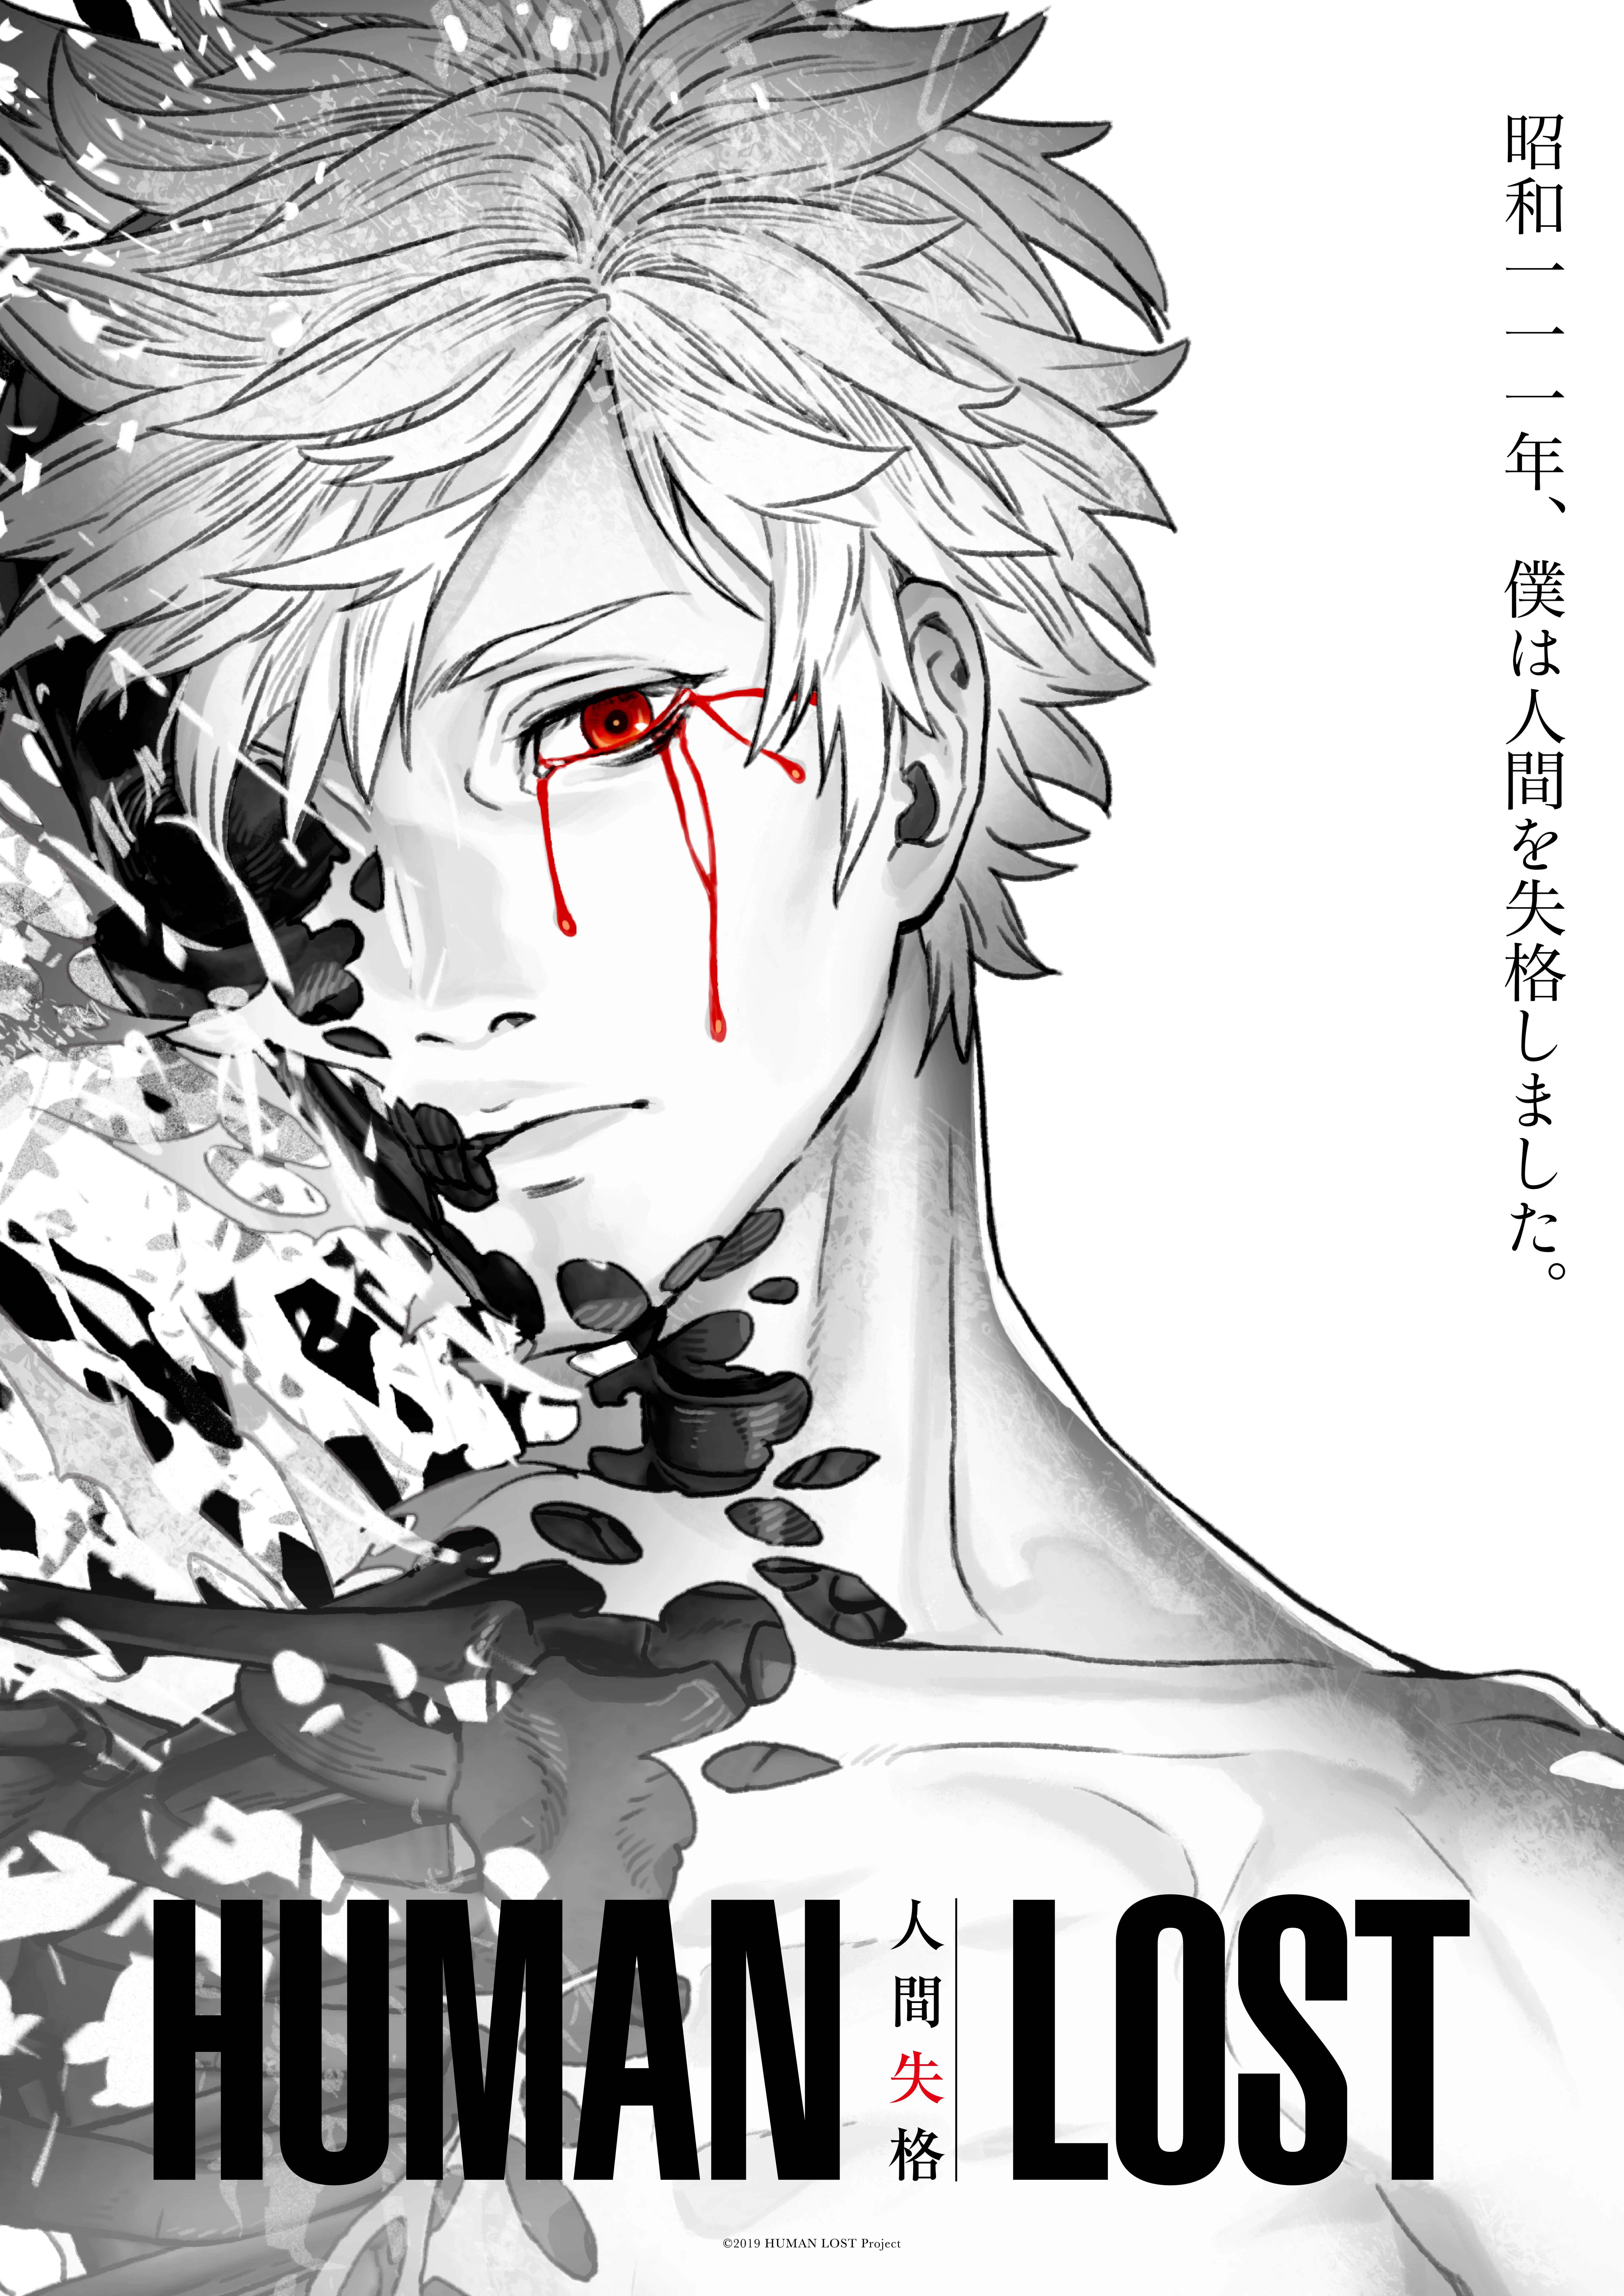 『HUMAN LOST 人間失格』ティザービジュアル ©2019 HUMAN LOST Project